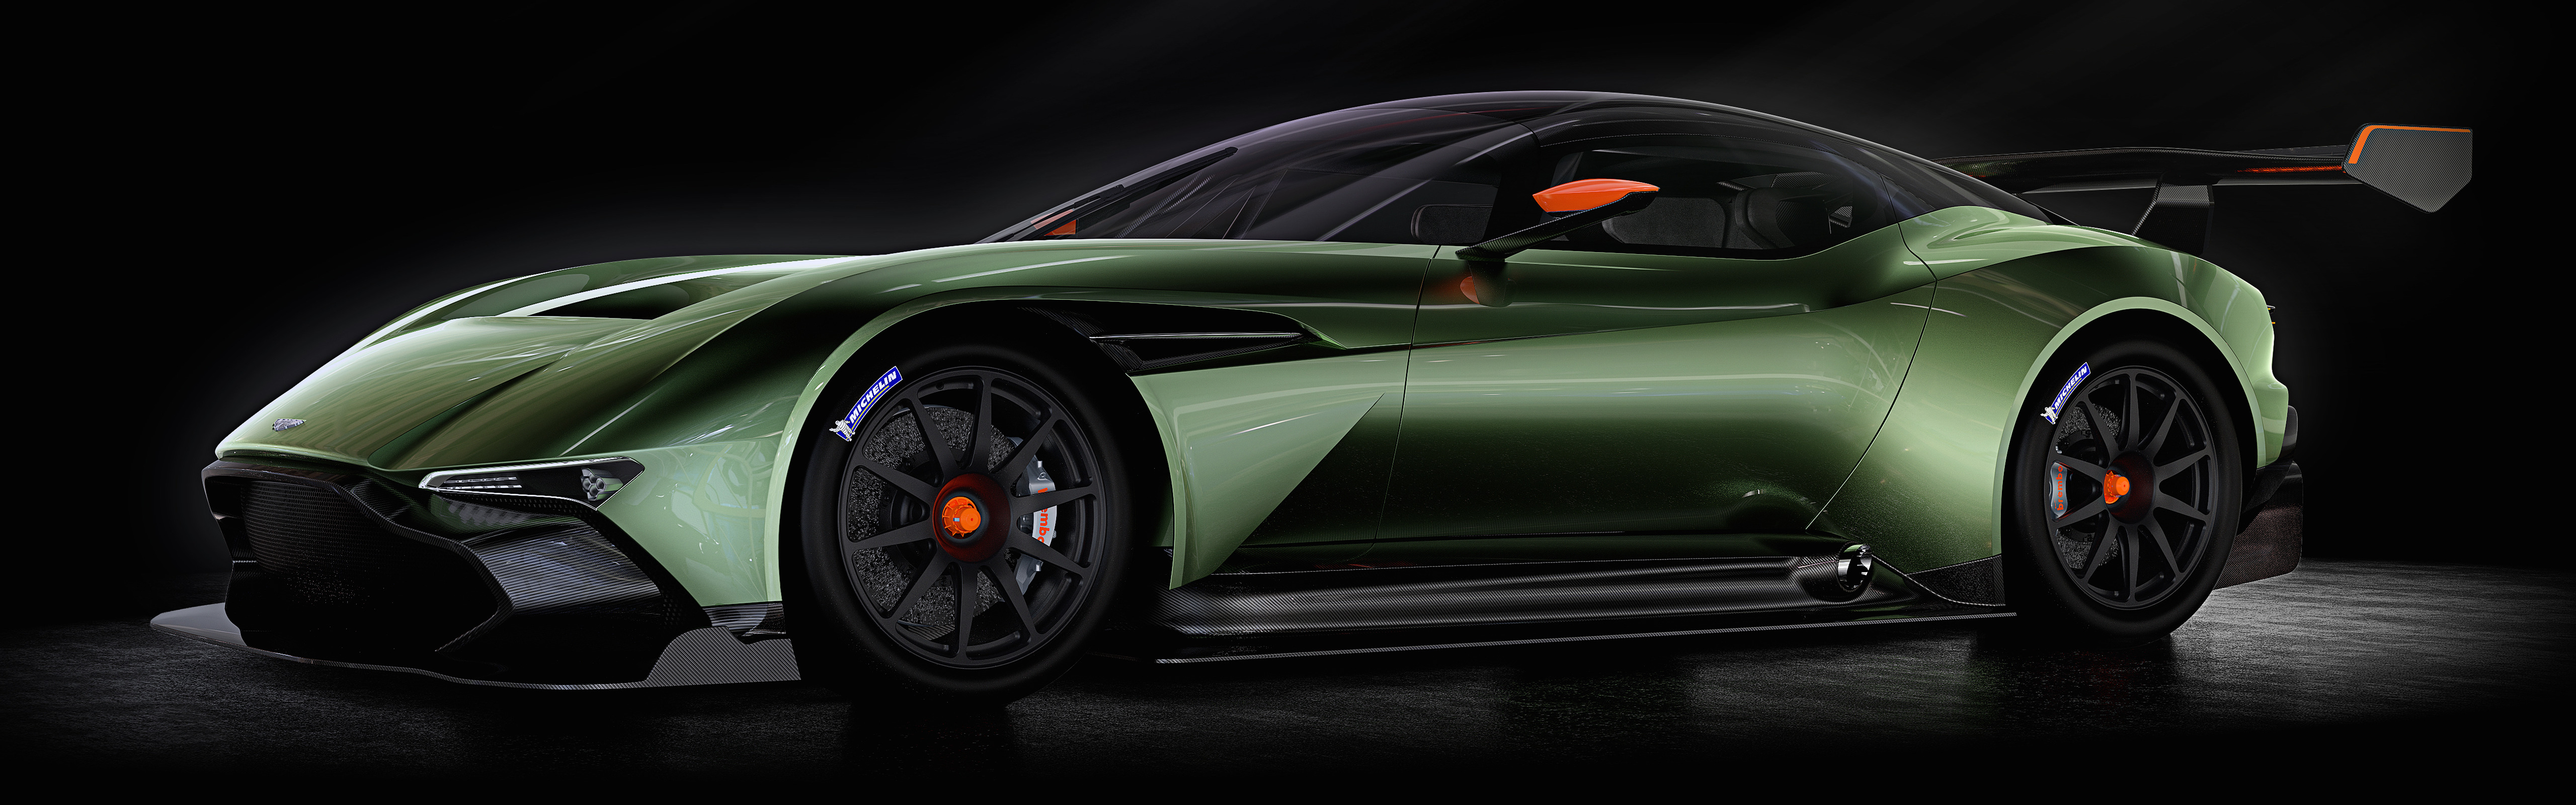 Aston Martin Vulcan, Car, Vehicle, Spotlights, Dual Monitors, Multiple Display, Simple Background Wallpaper